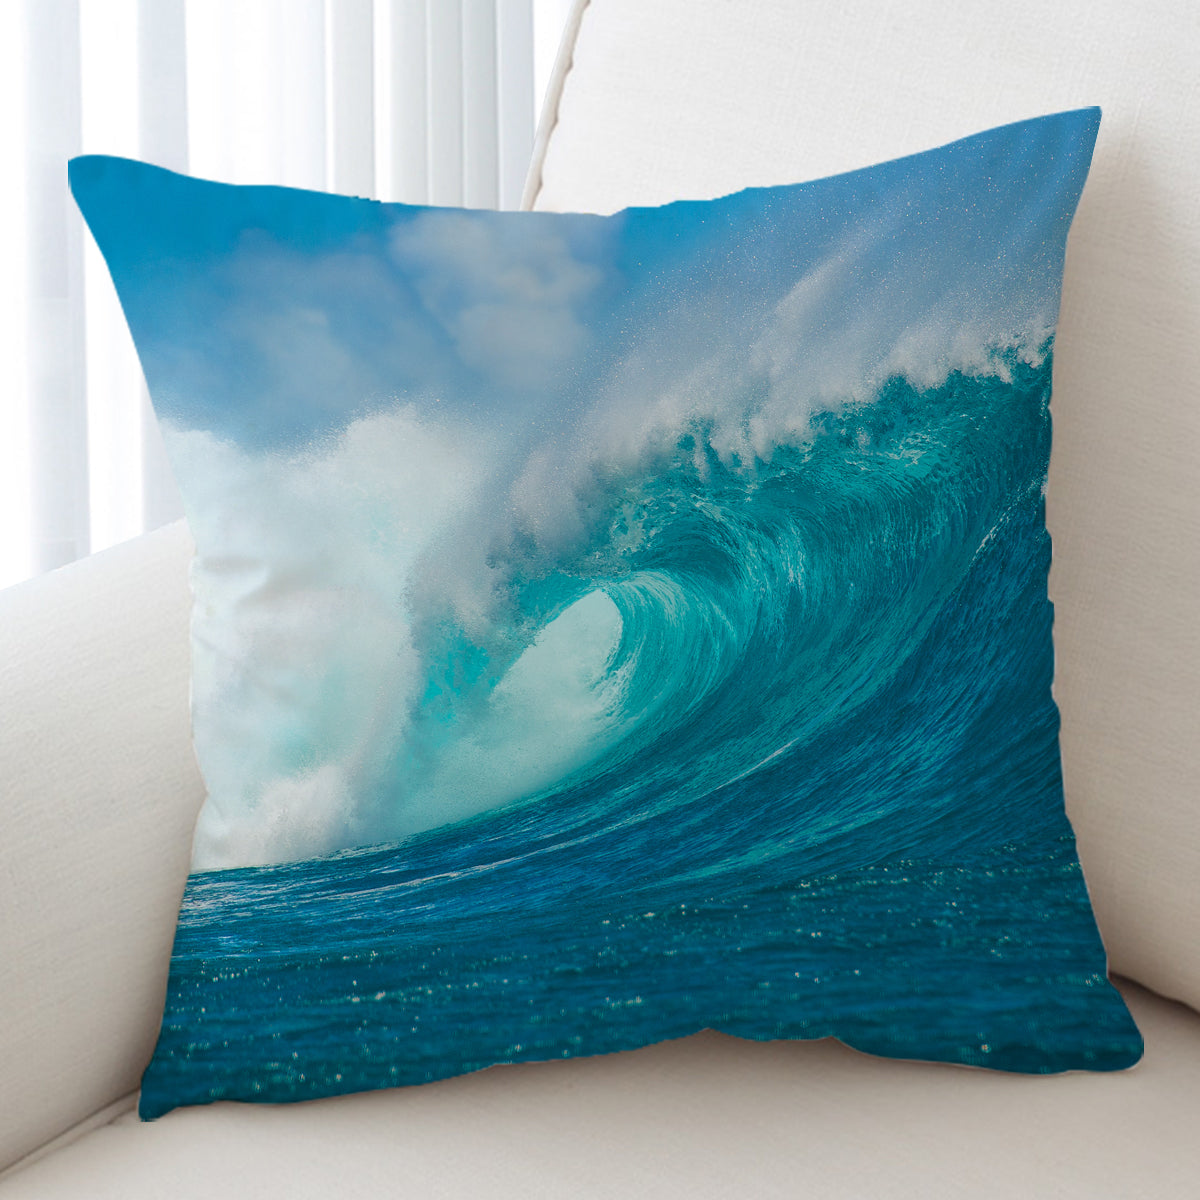 Ocean Wave Pillow Cover